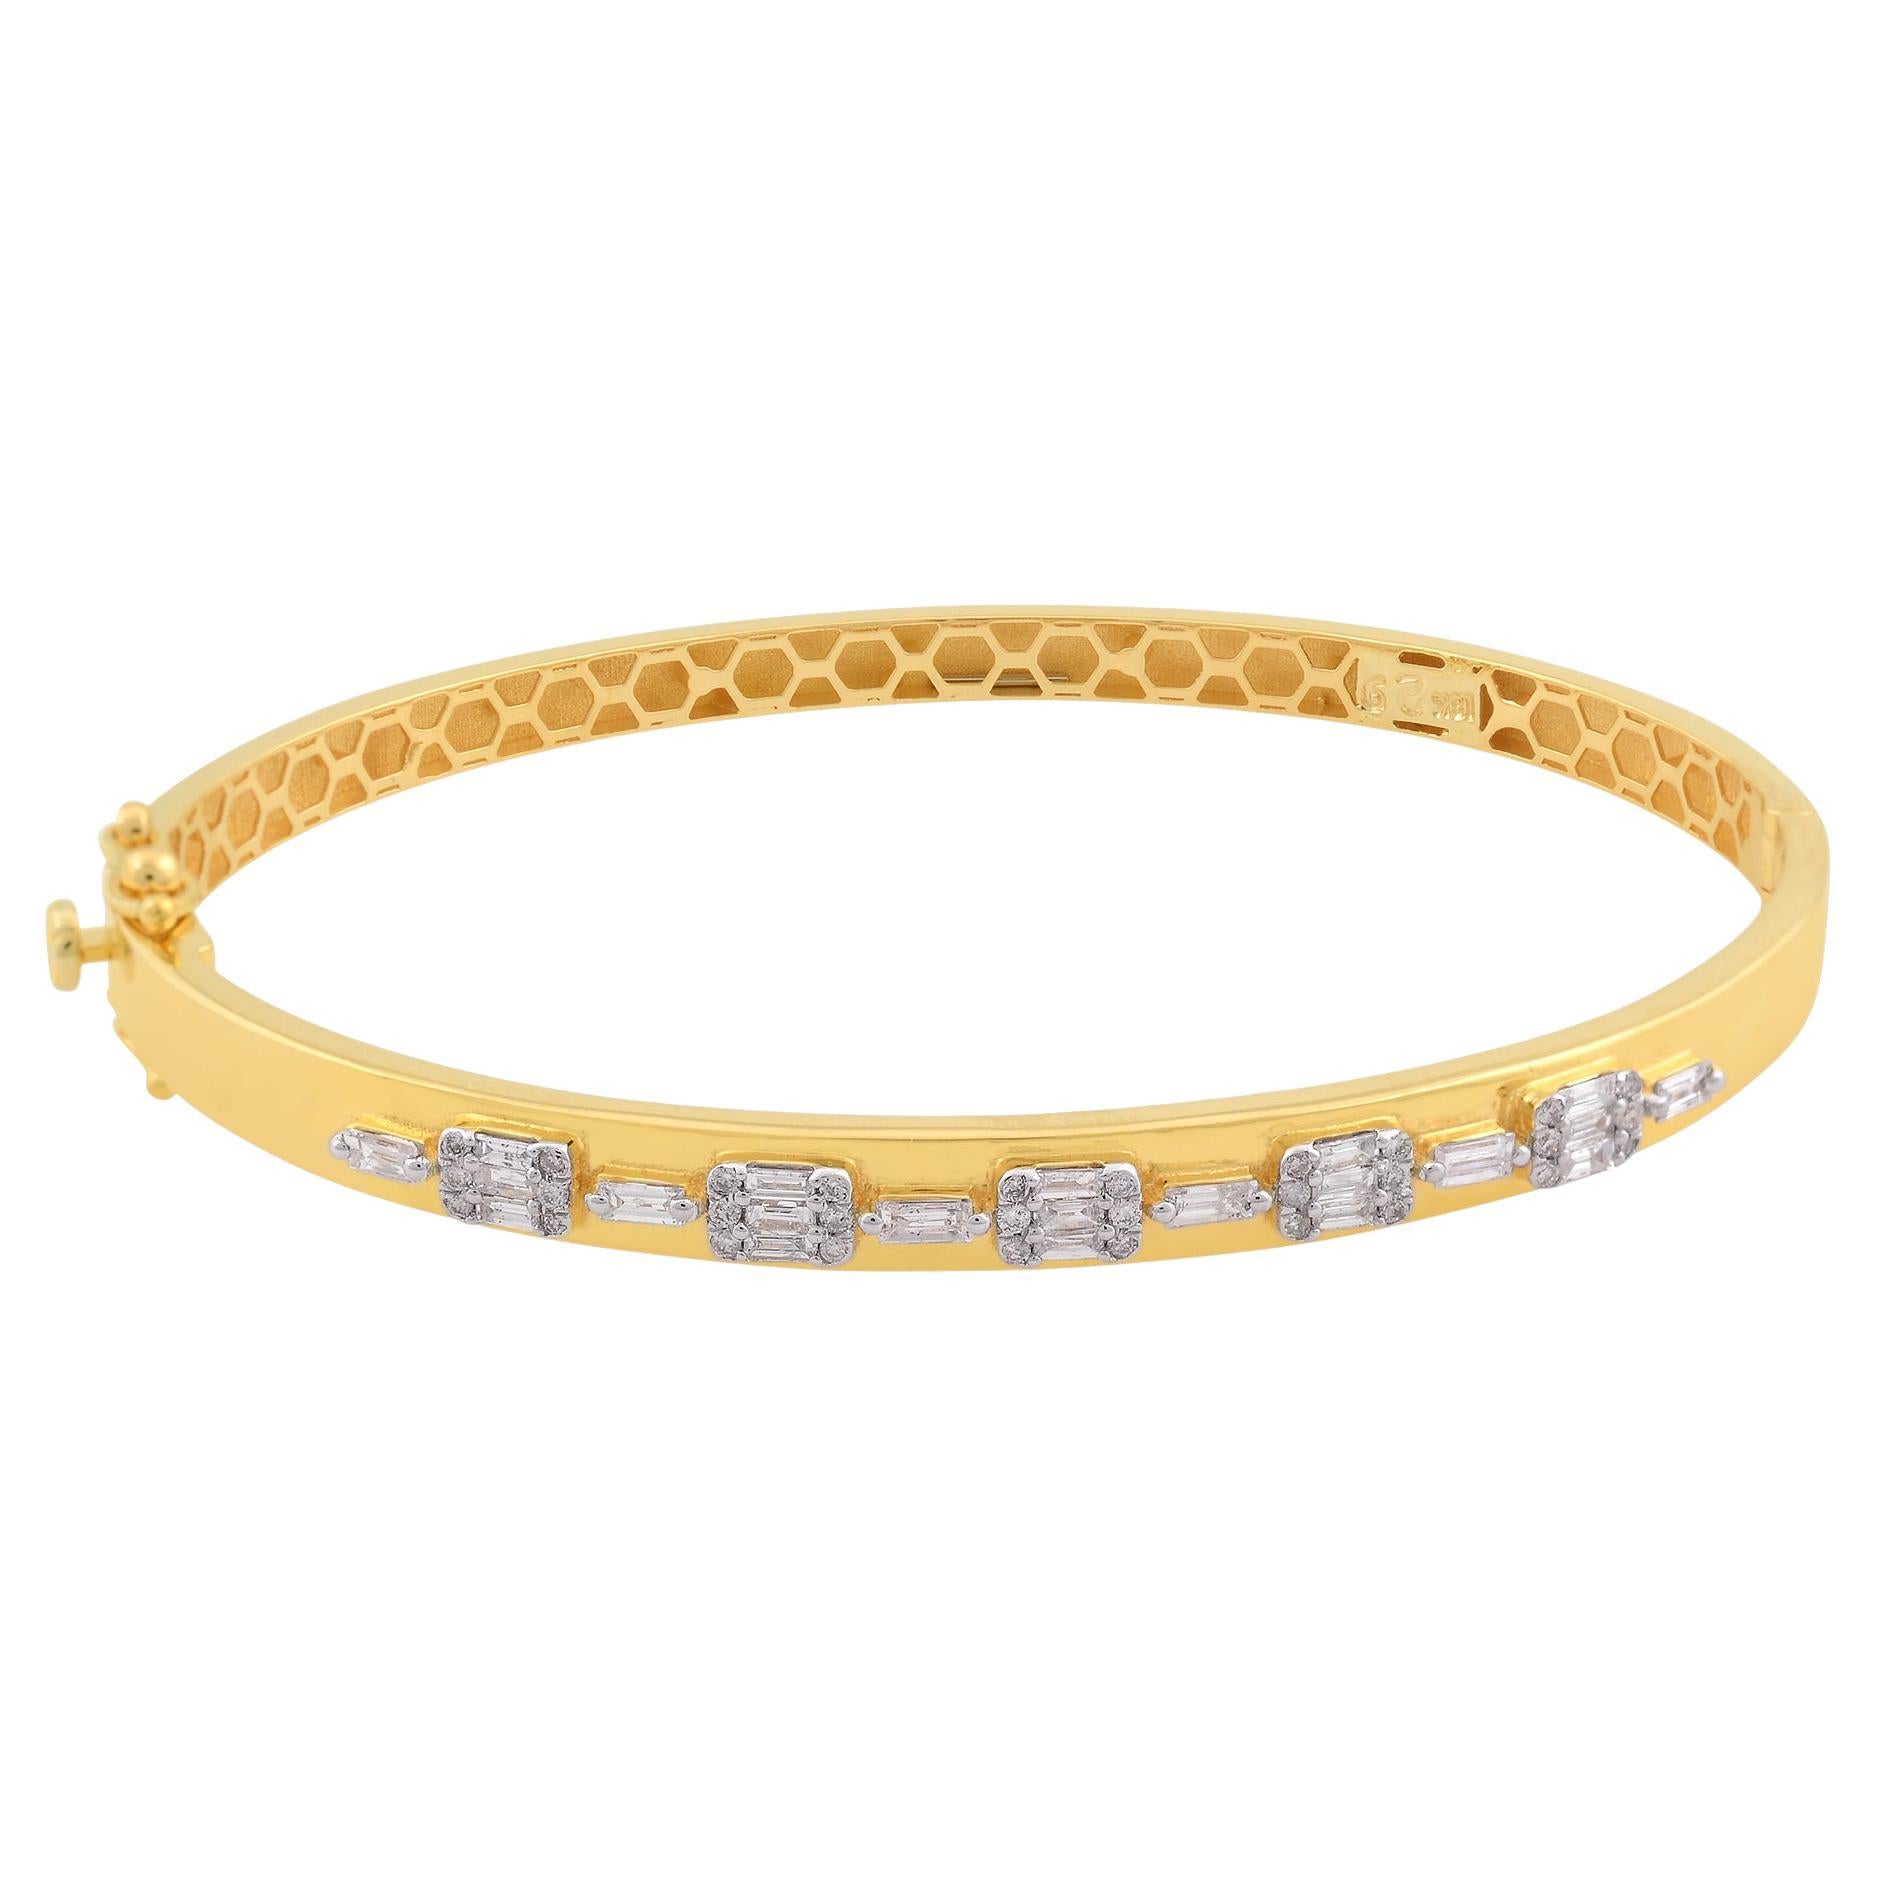 Real SI Clarity HI Color Baguette Diamond Bangle Bracelet 18 Karat Yellow Gold For Sale